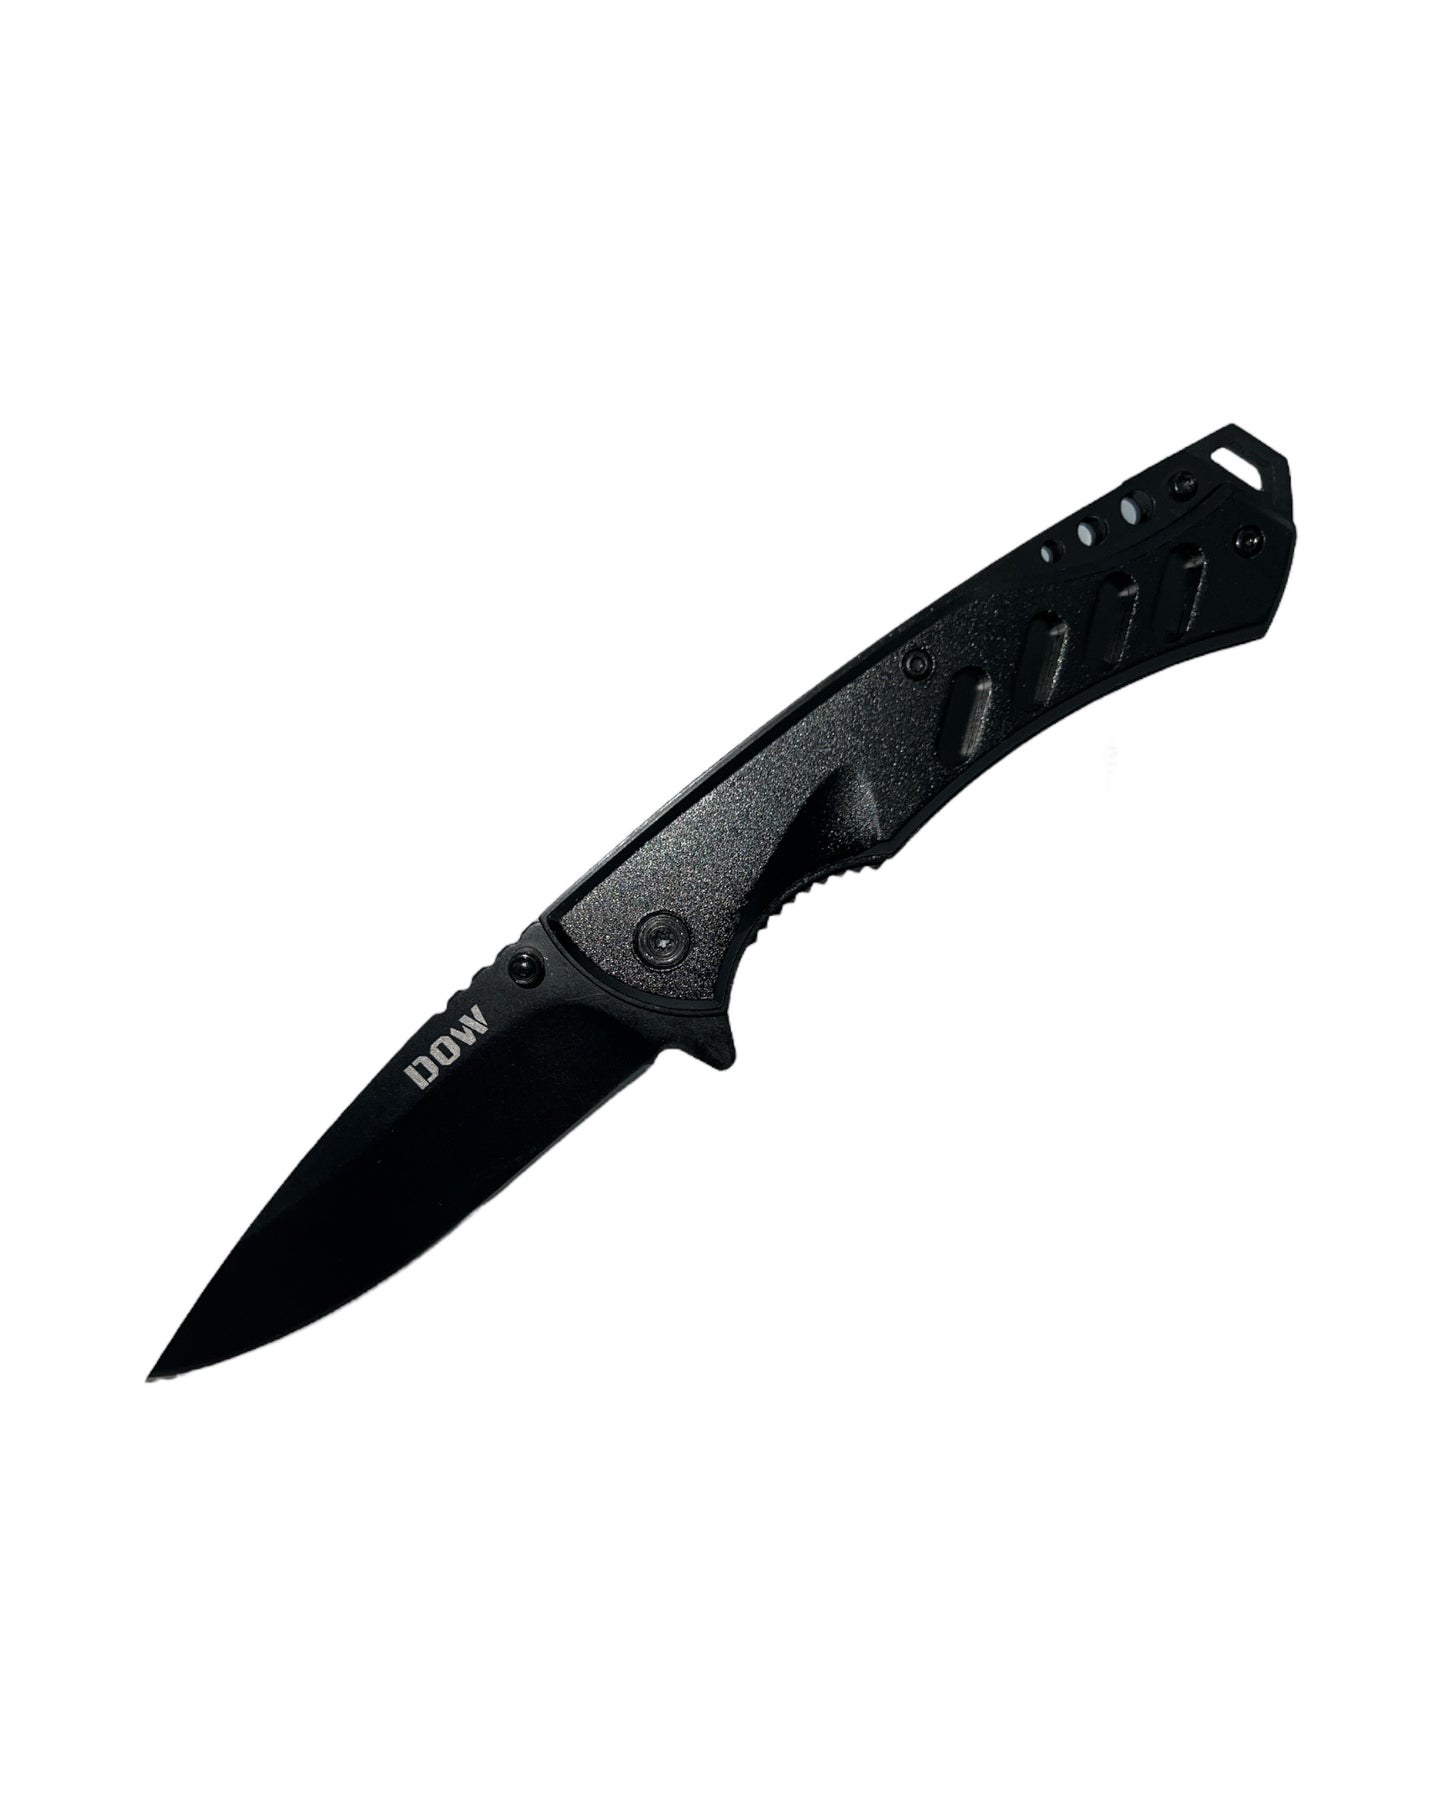 Aluminium Black Knife - 3.5inch (9cm) Blade